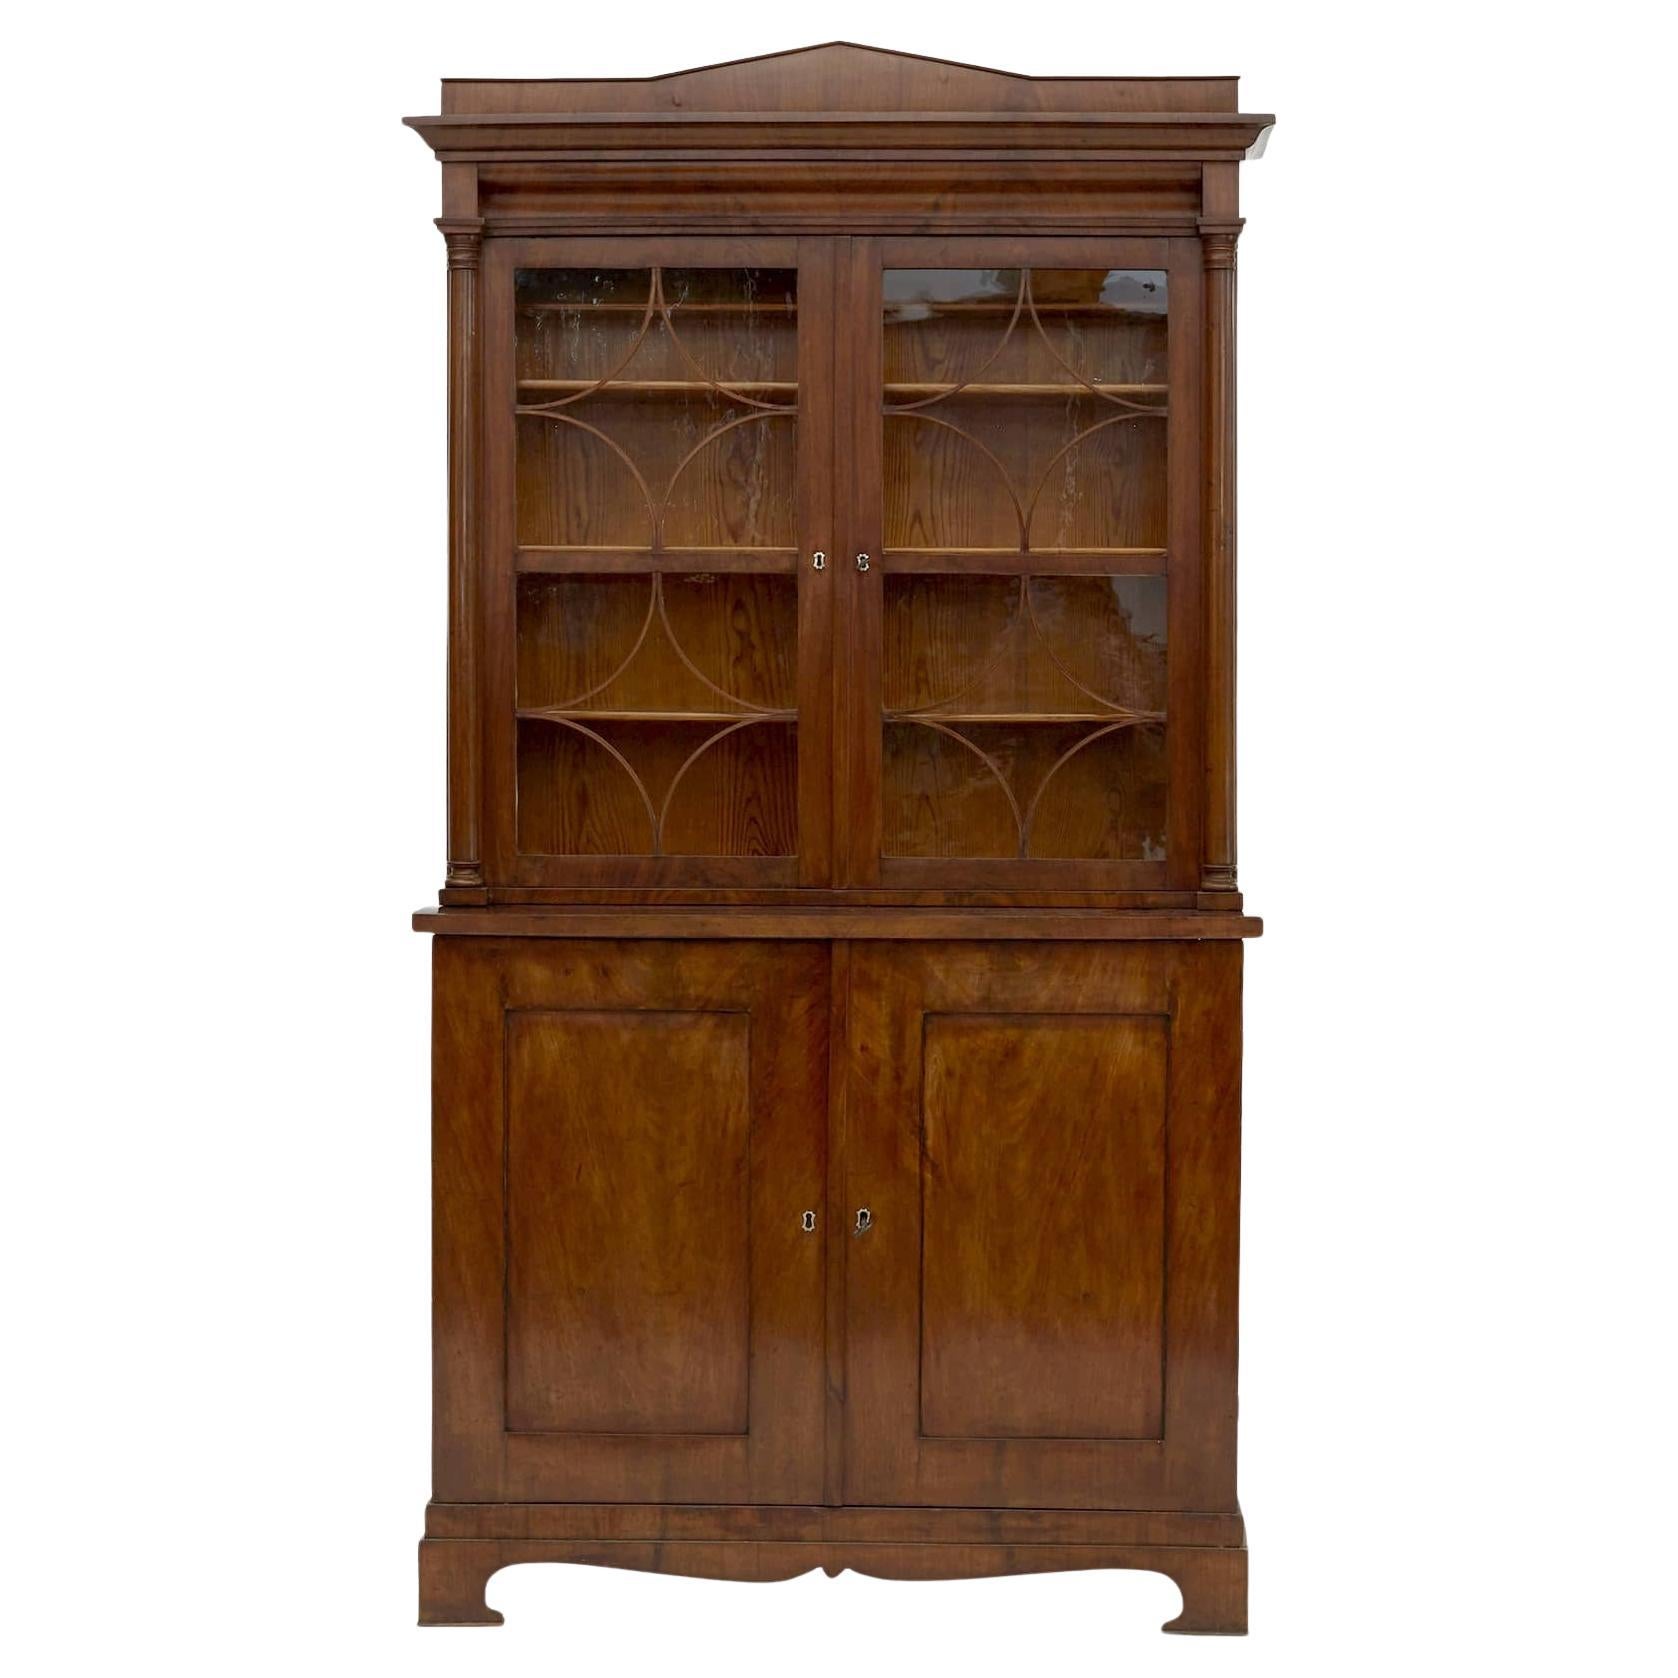 Antique Biedermeier Mahogany Bookcase. Neoclassical Style, 1820-1830